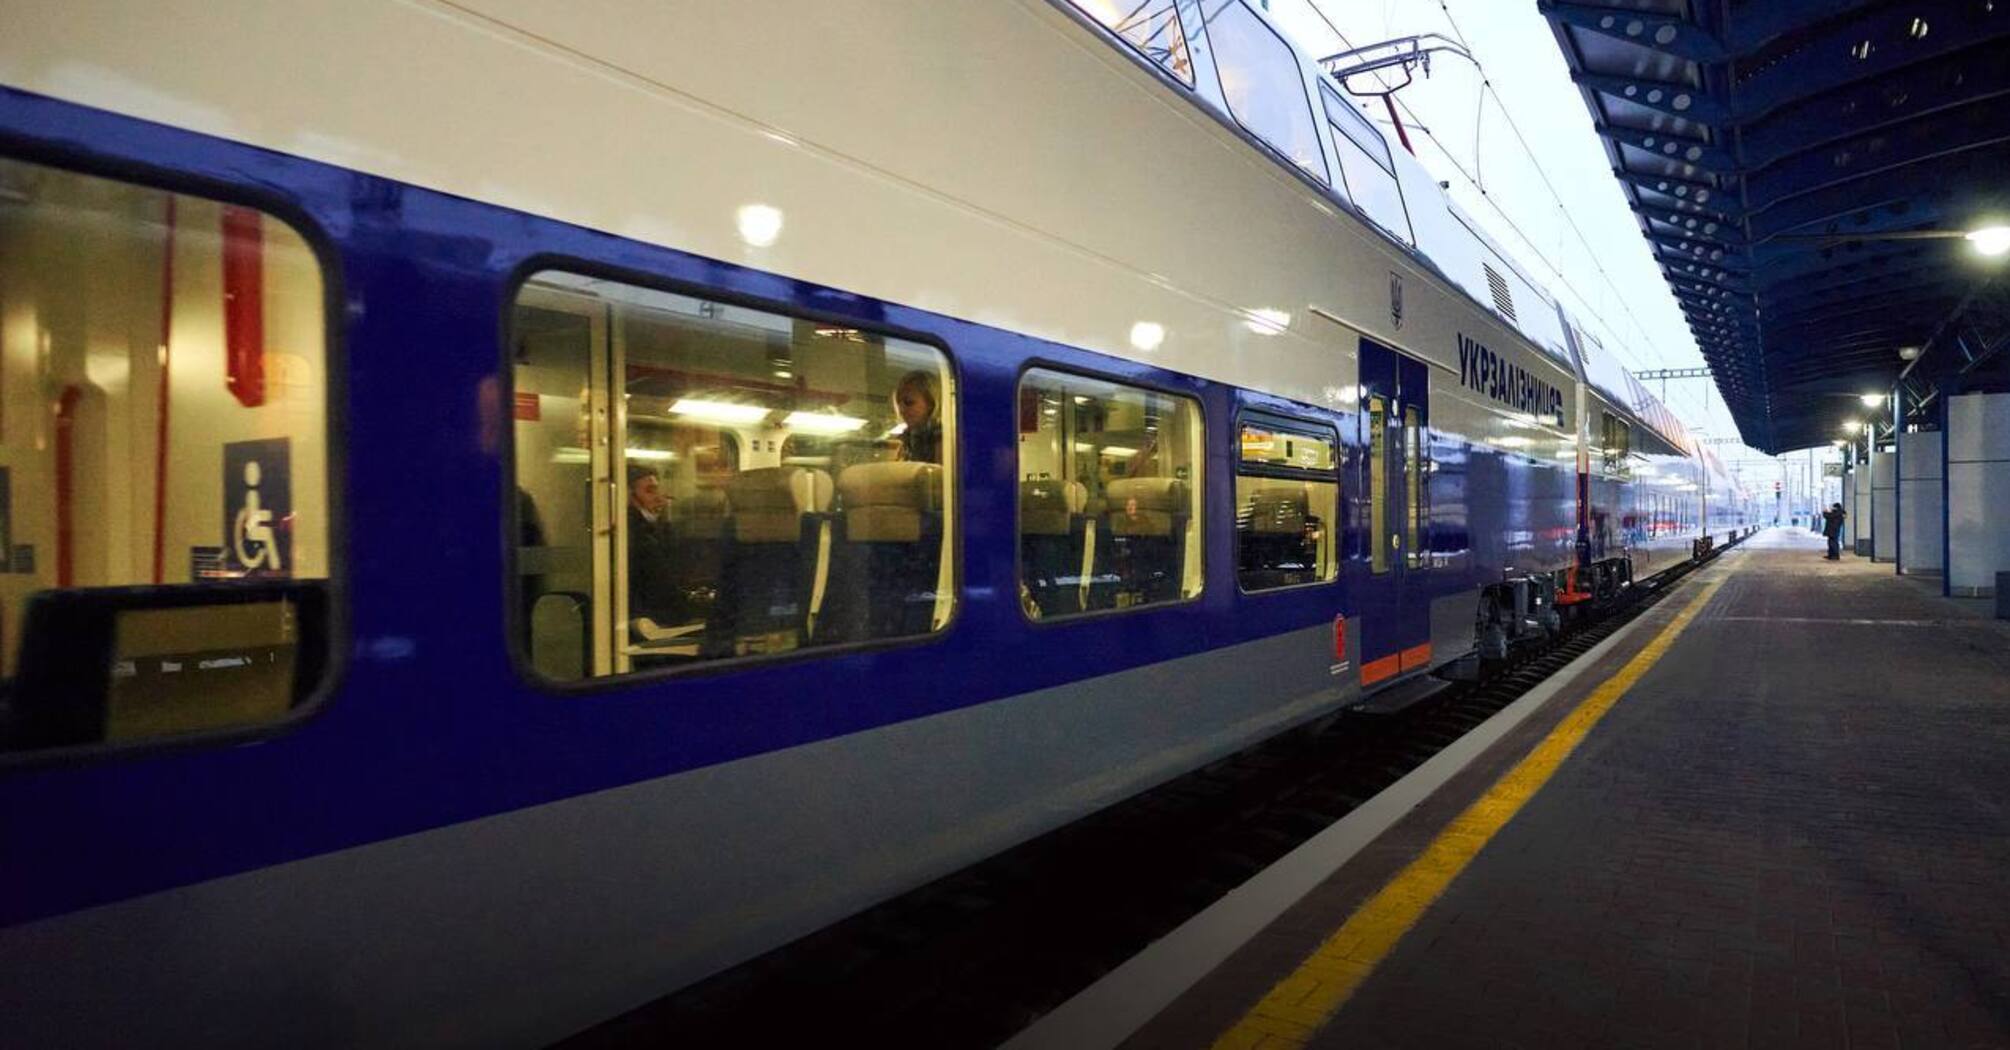 Ukrzaliznytsia has launched a new Intercity+ train on a popular route